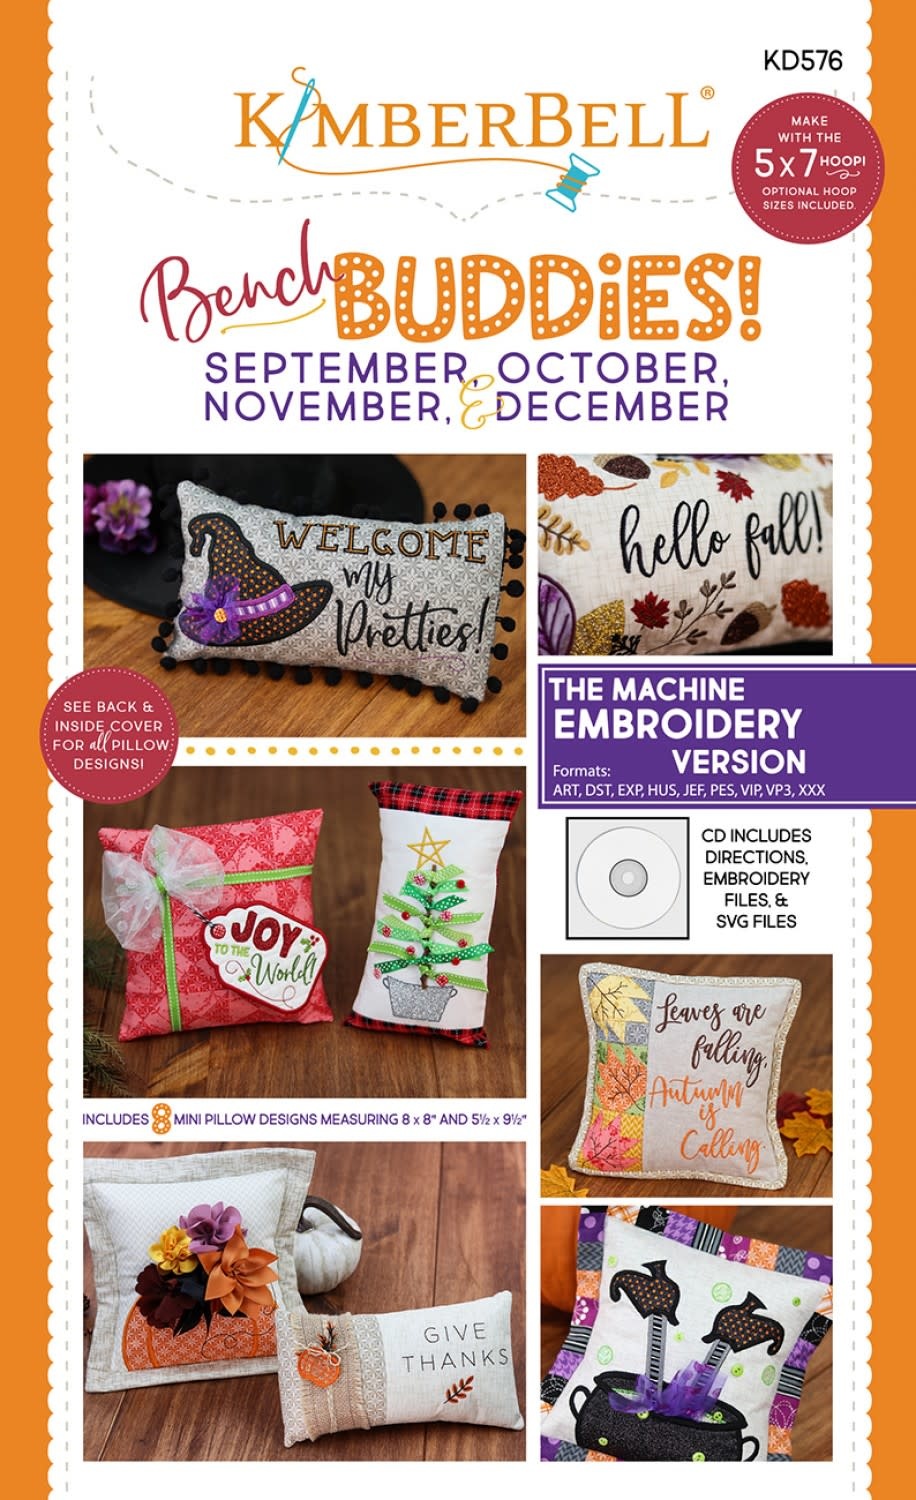 Kimberbell Designs Bench Buddies:  September, October, November, December (Machine Embroidery Version)